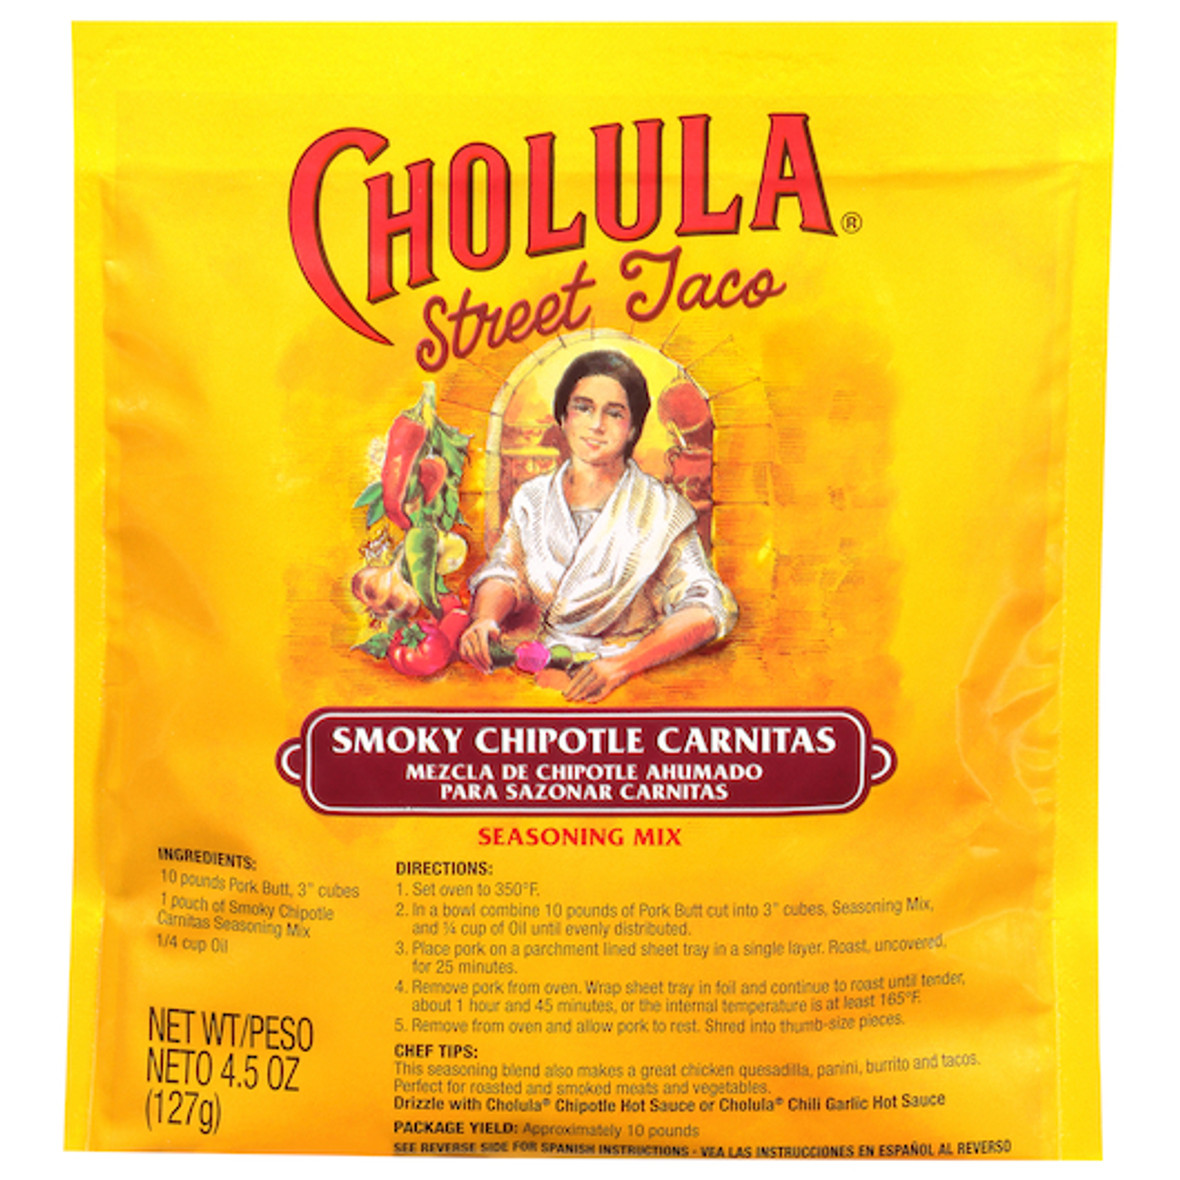 Cholula Street Taco Smoky Chipotle Carnitas Seasoning Packet